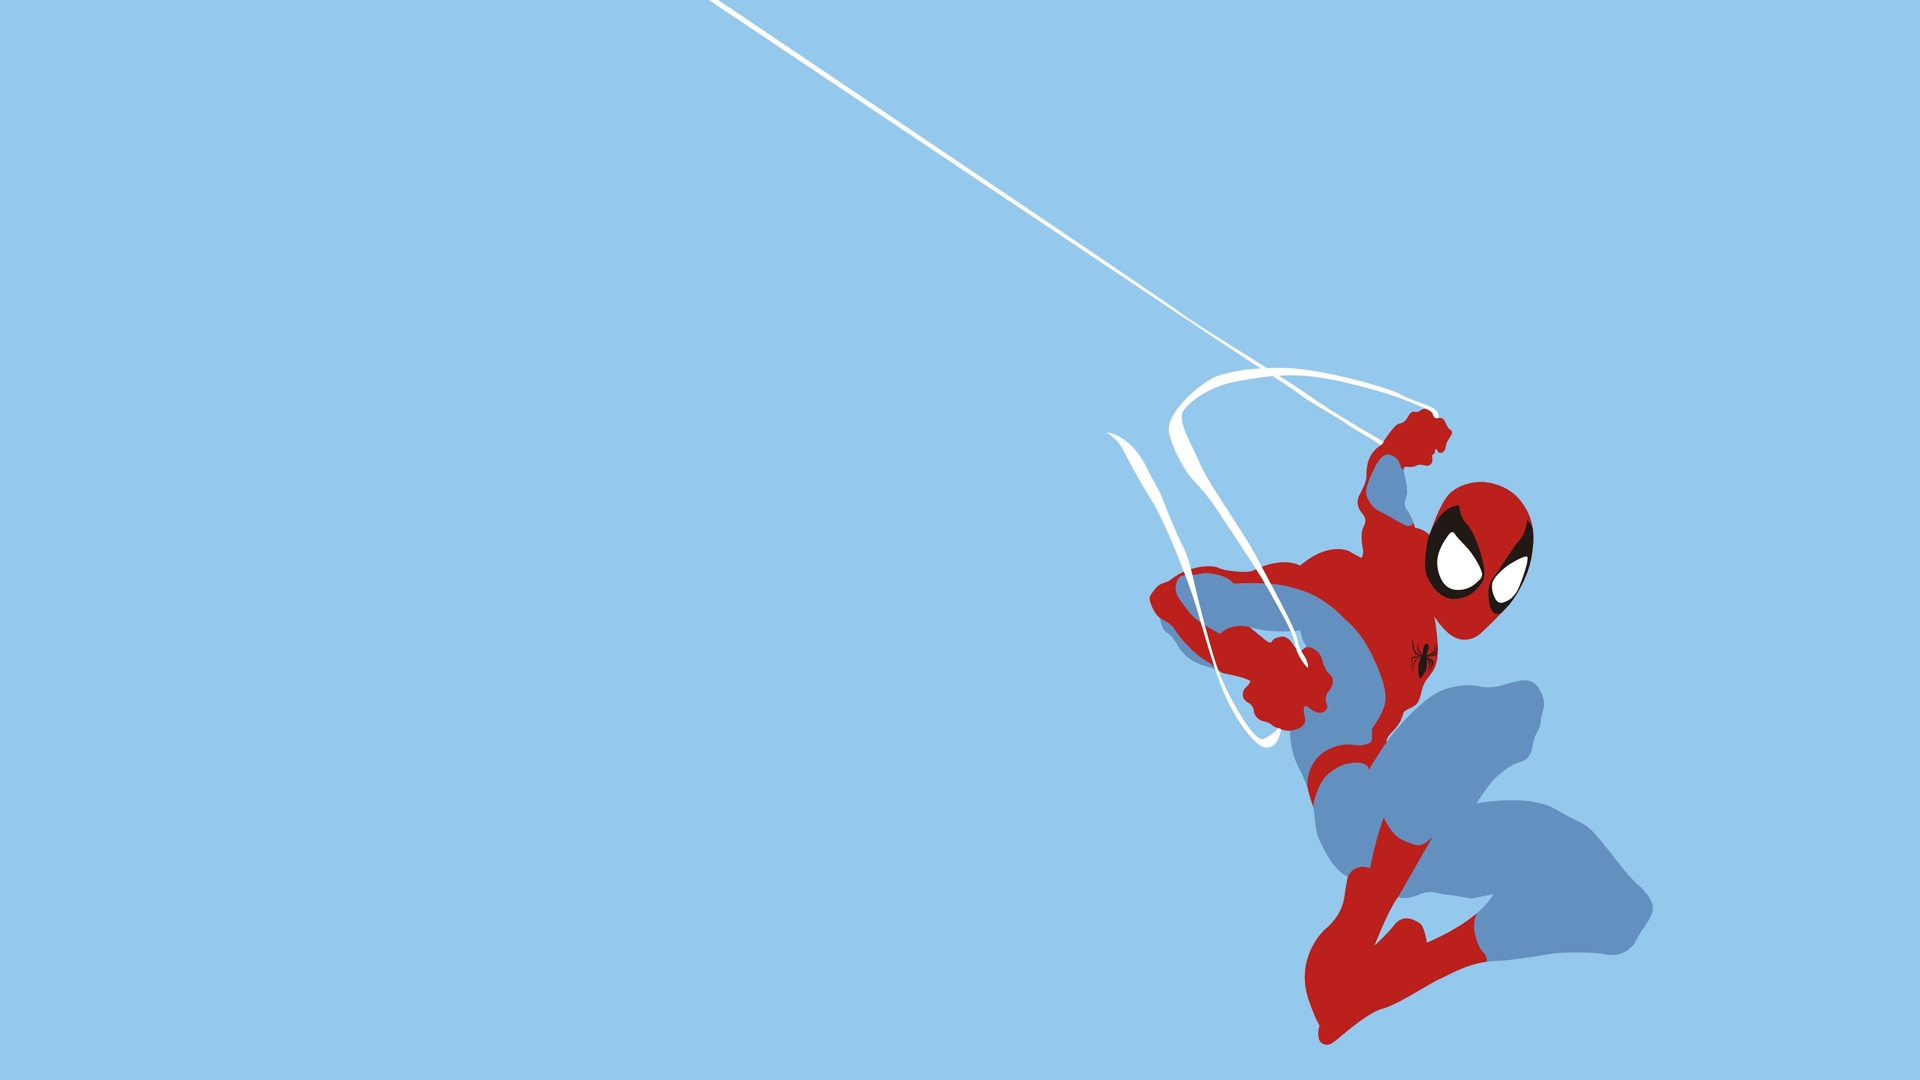  Spider Man  HD  Wallpaper  Background Image 1920x1080 